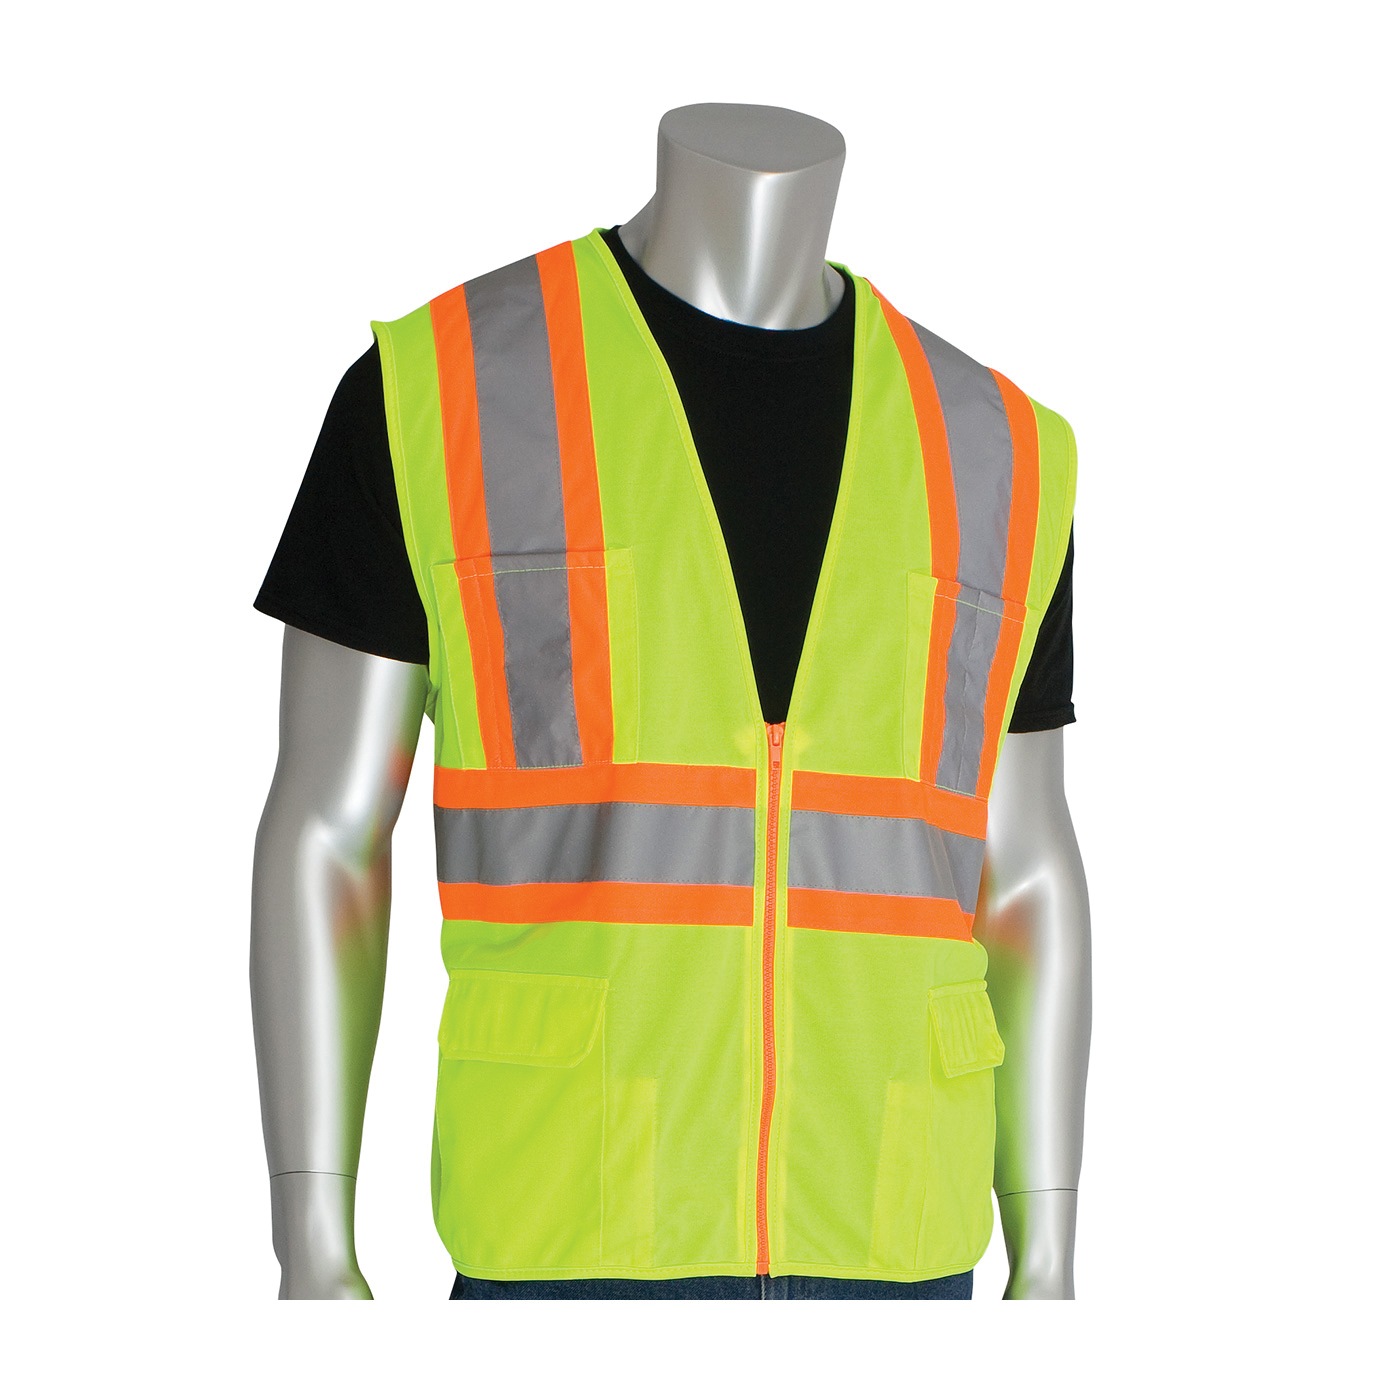 PIP® 302-MAPLY-4X 2-Tone Premium Surveyor Safety Vest, 4XL, Hi-Viz Lime Yellow, Polyester, Zipper Closure, 11 Pockets, ANSI Class: Class 2, Specifications Met: ANSI 107 Type R